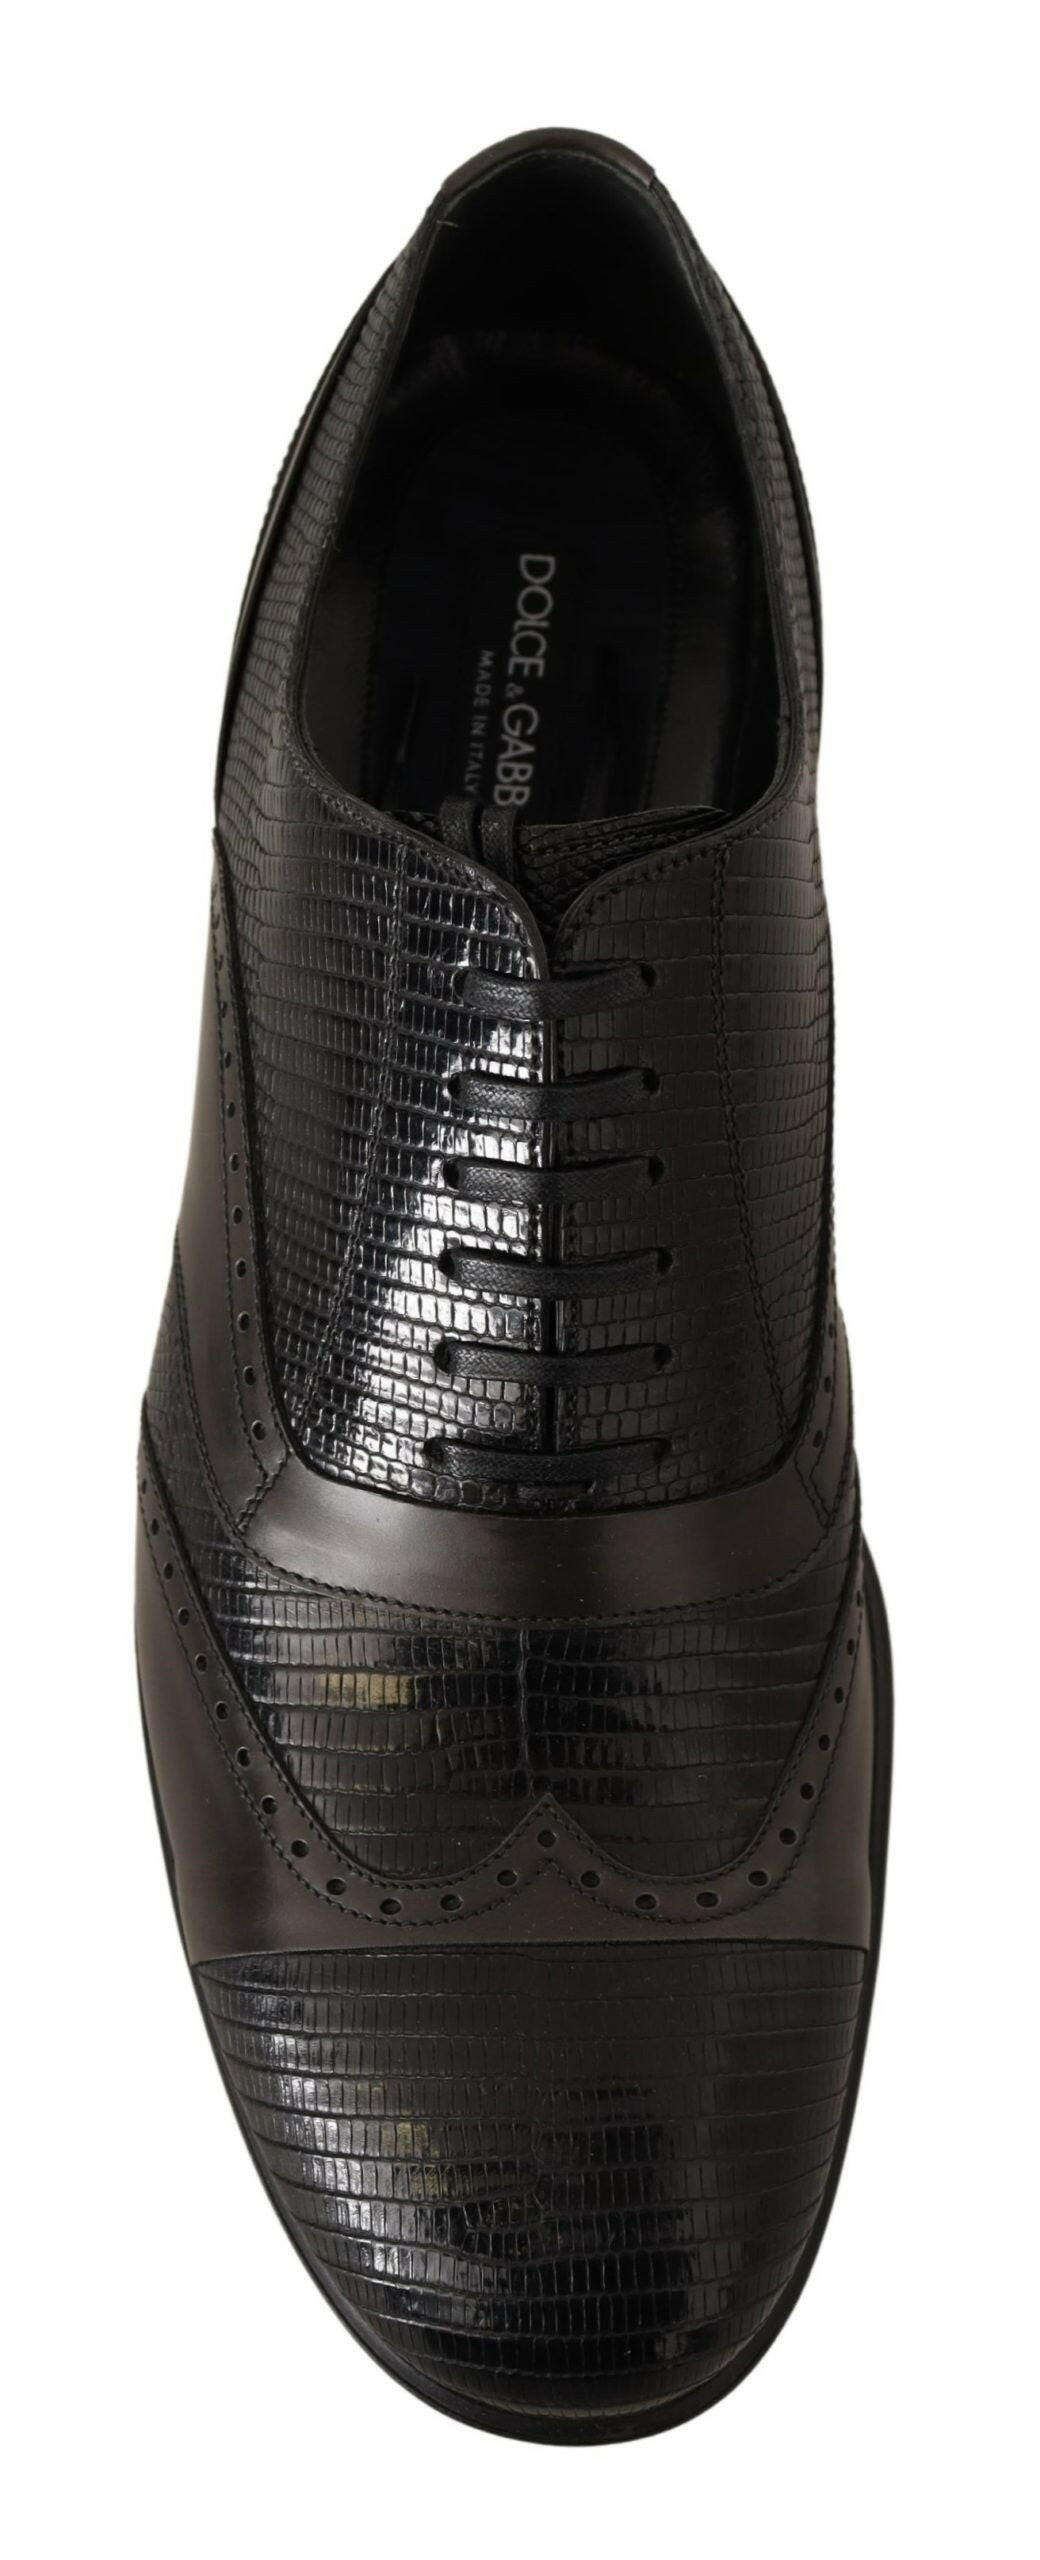 Dolce & Gabbana Brown Lizard Skin Leather Oxford Dress Shoes - GENUINE AUTHENTIC BRAND LLC  